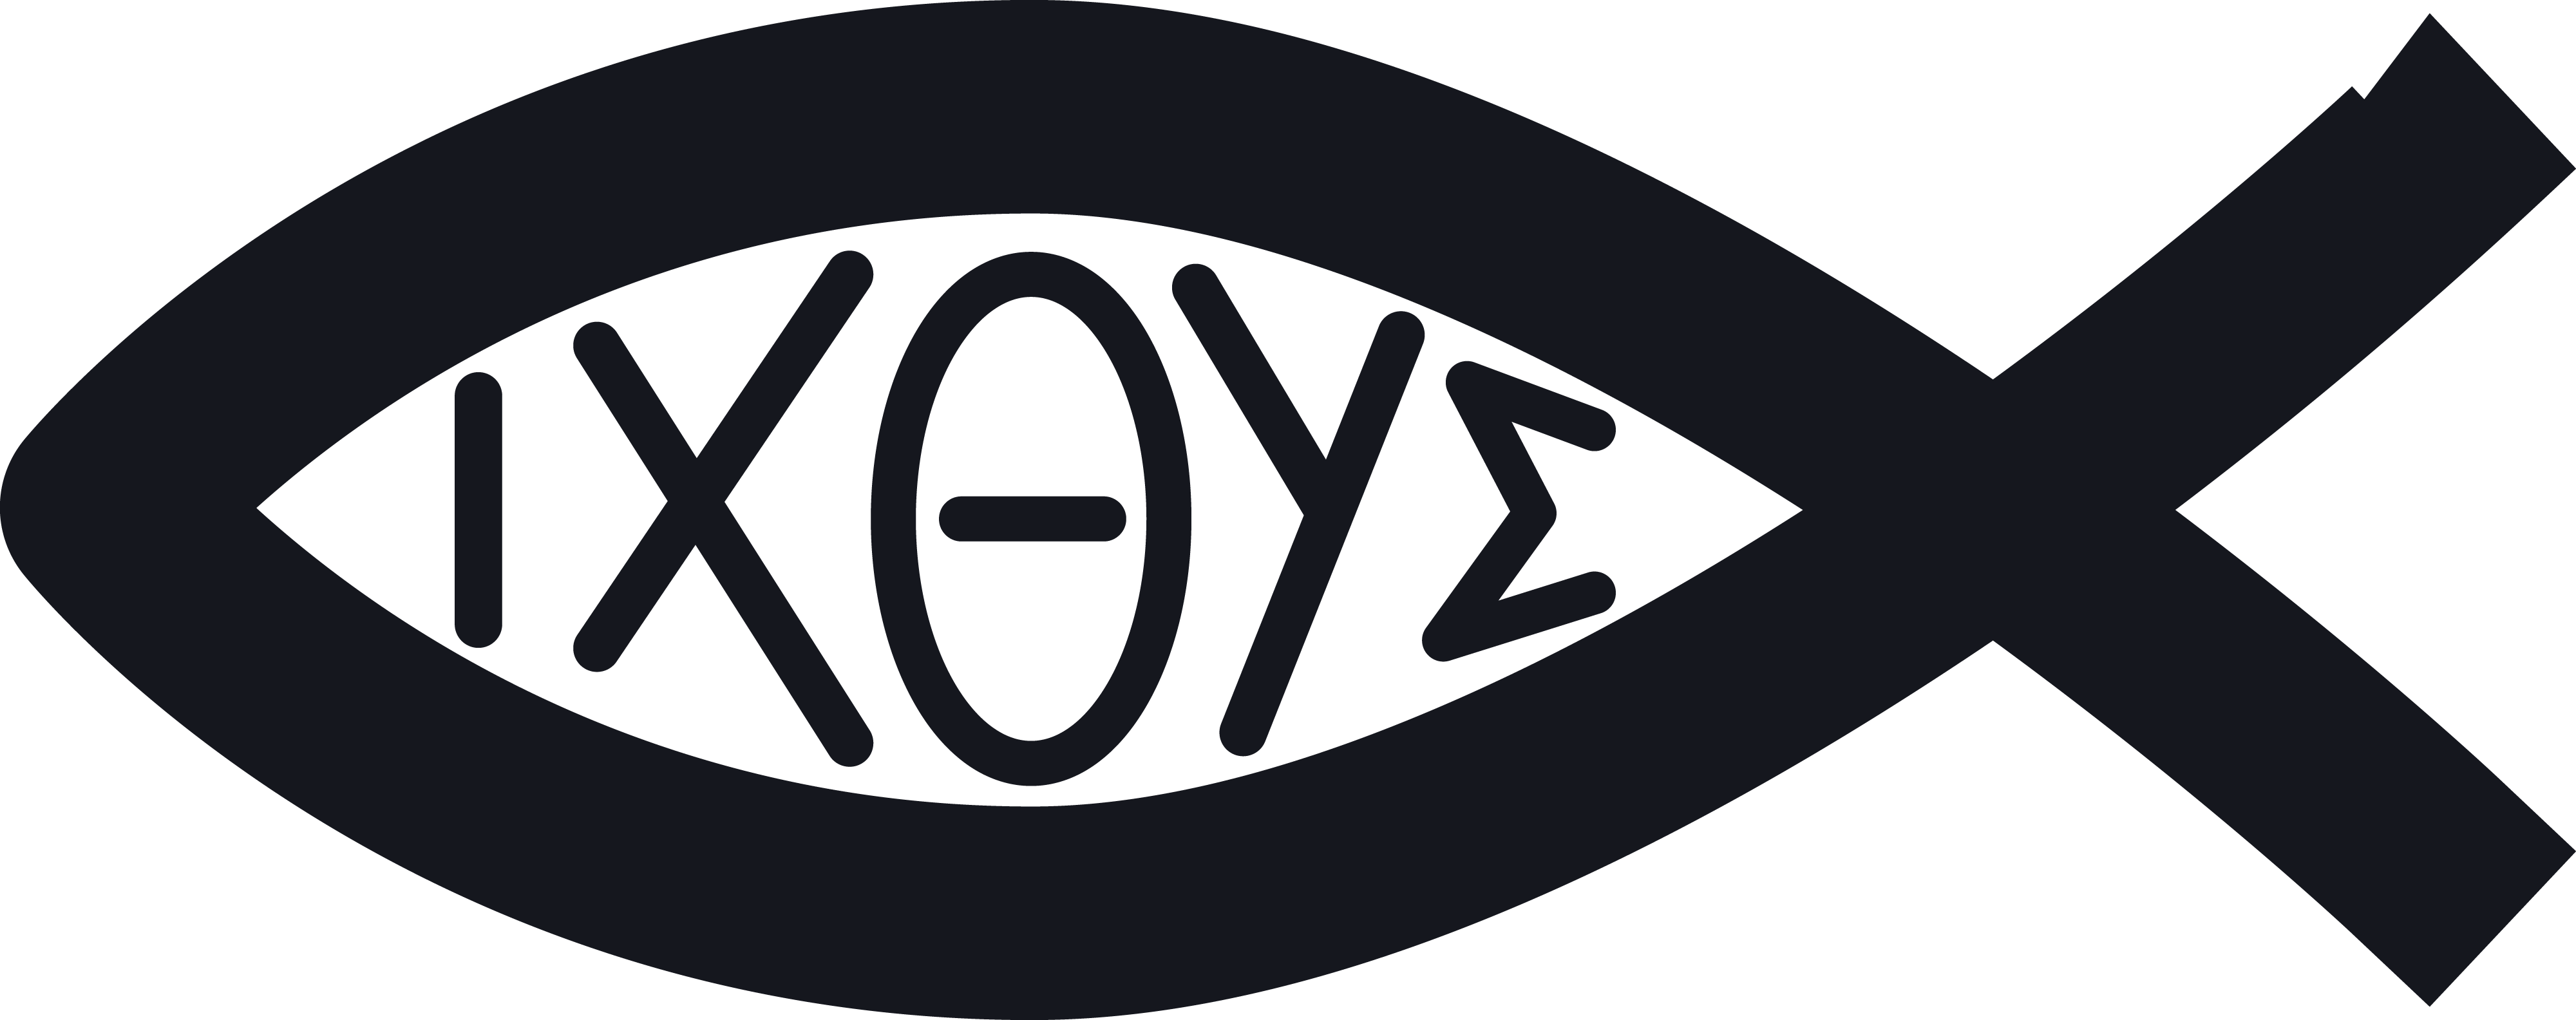 Free Clipart Of A Christian Fish Ichthys - Christian Fish Symbol (4000x1584)